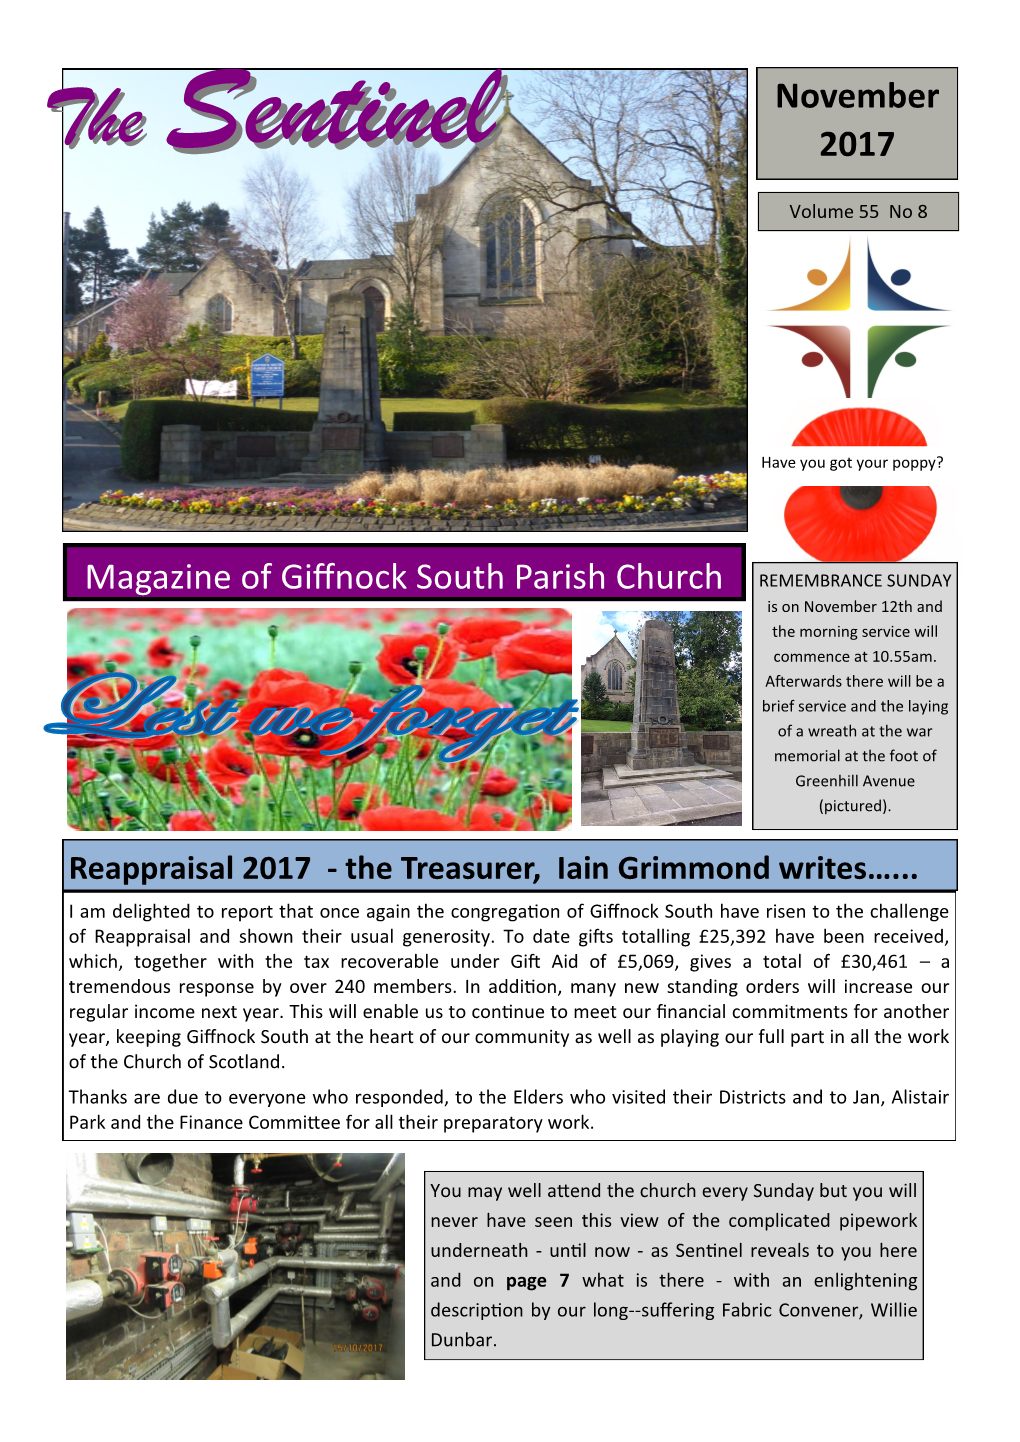 November 2017 Magazine of Giffnock South Parish Church